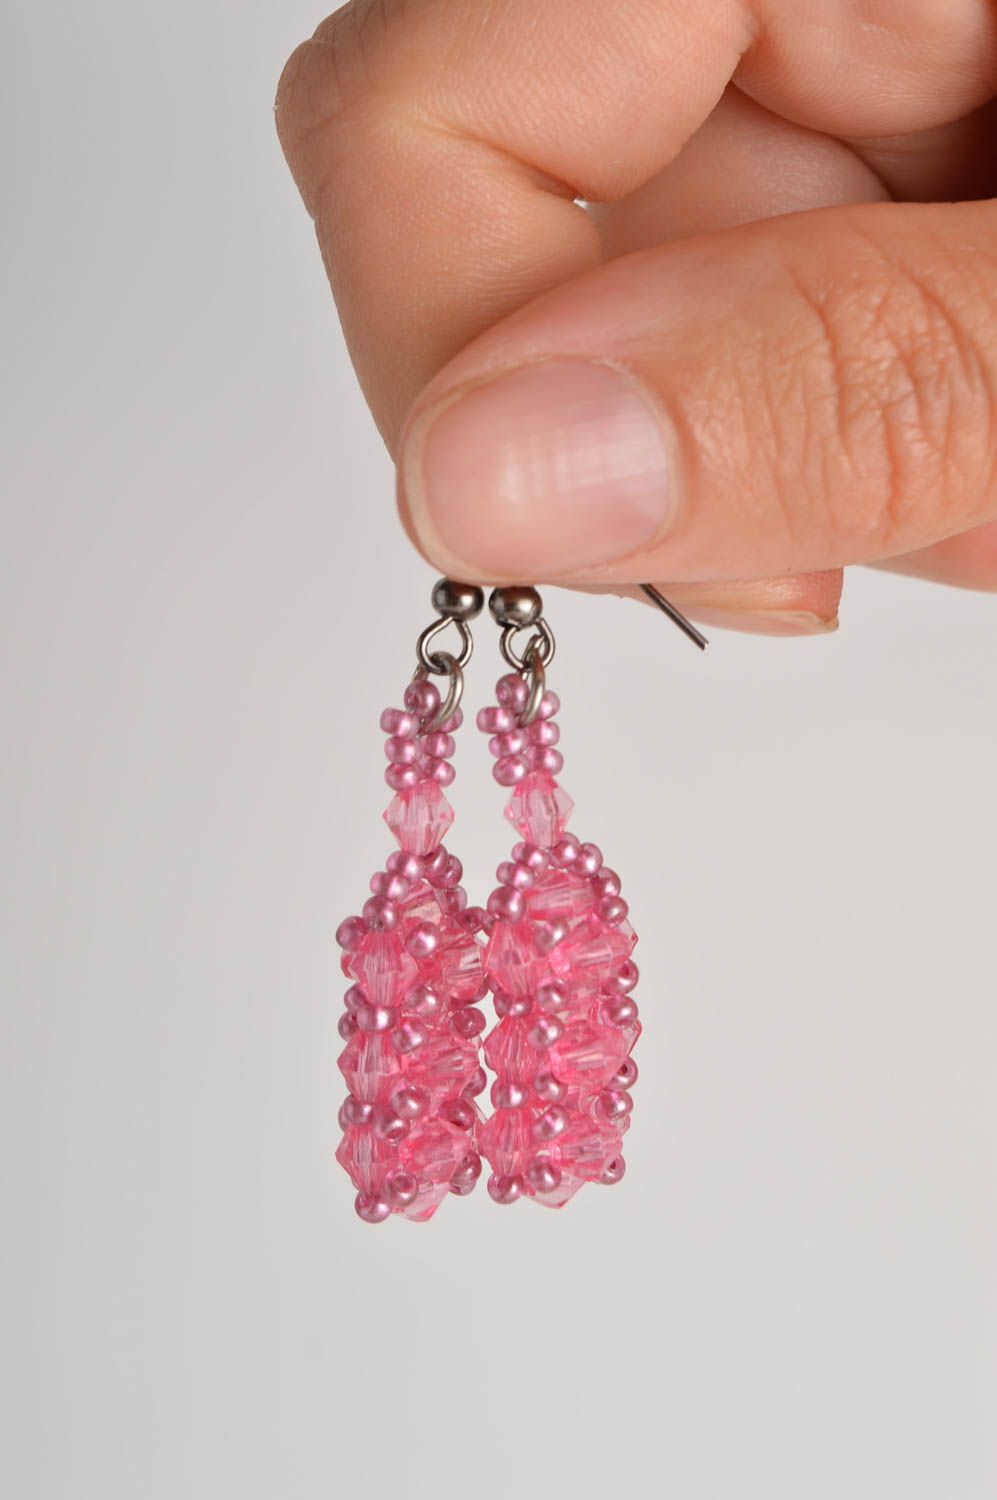 Cute handmade beaded earrings fashion accessories woven bead earrings gift ideas photo 5